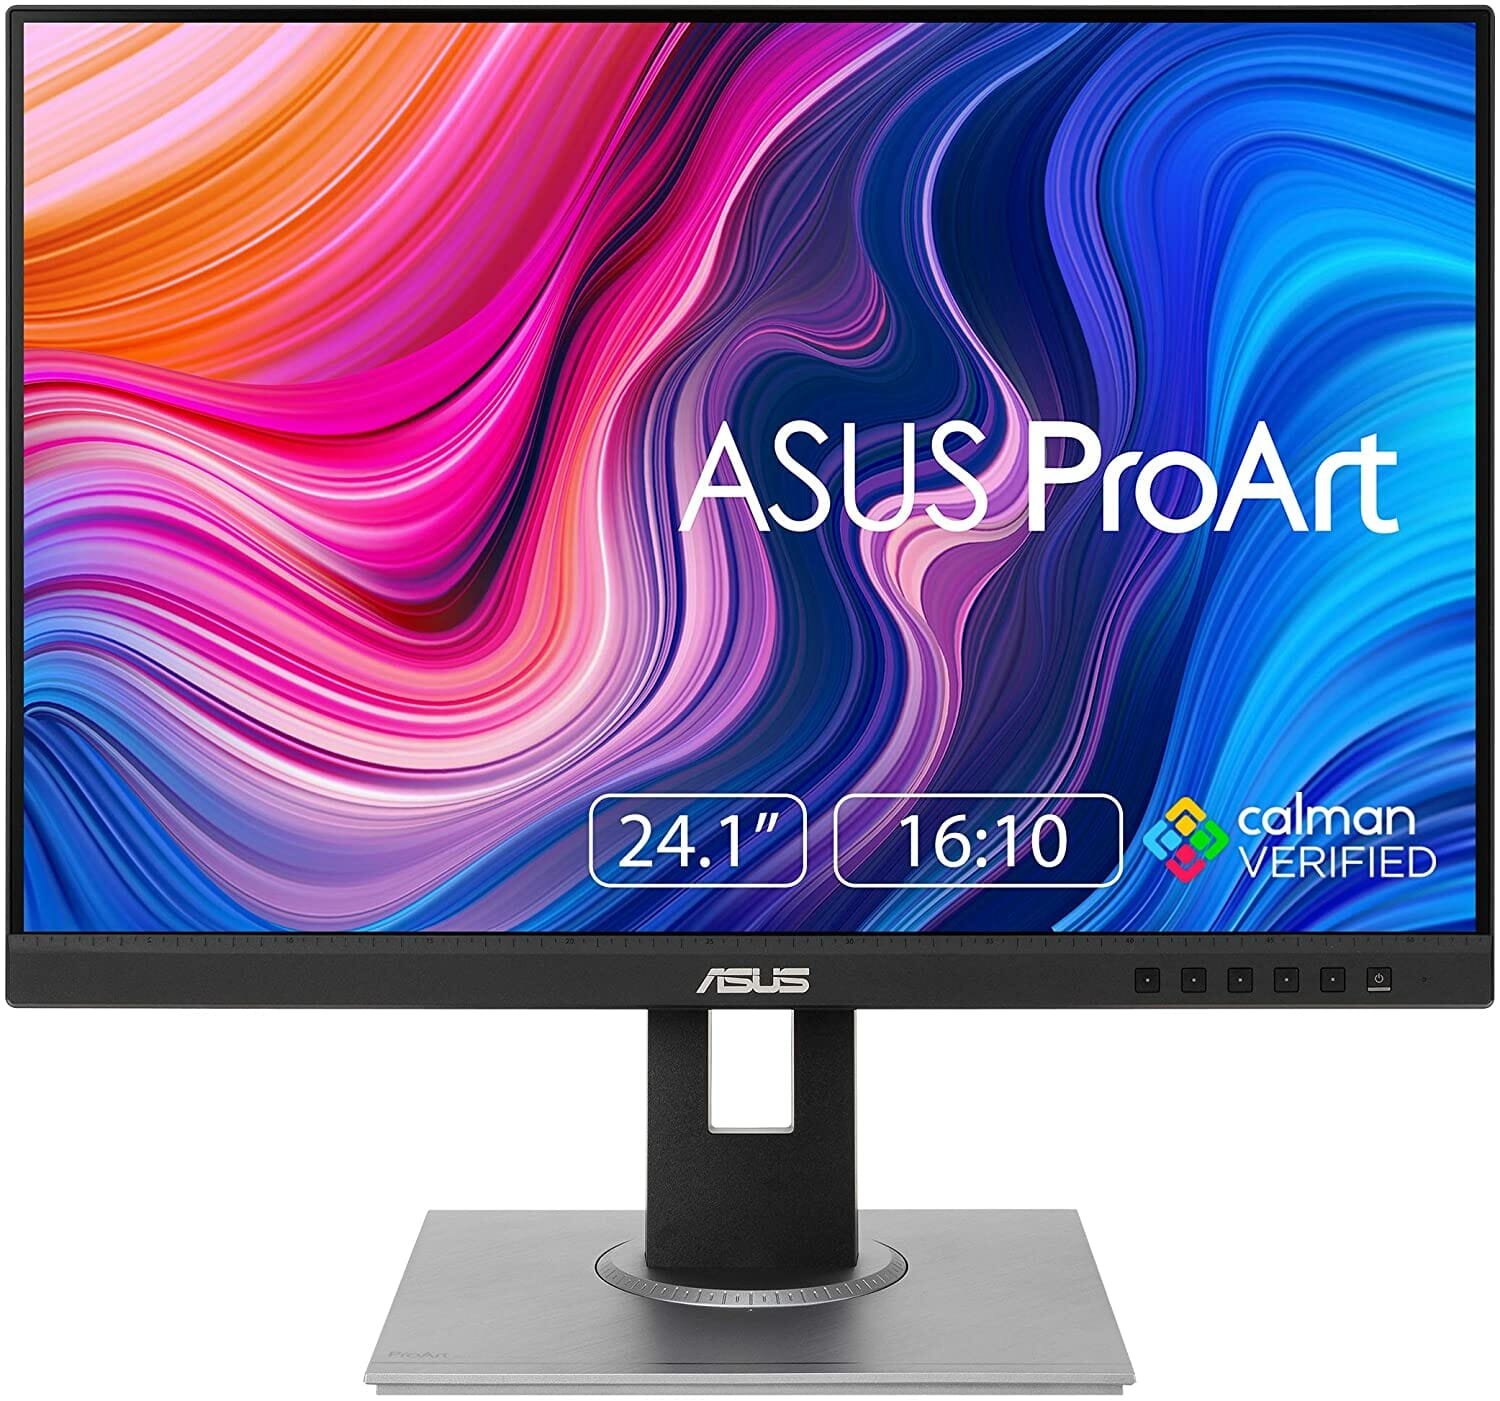  Asus Proart  24.1” Monitor 